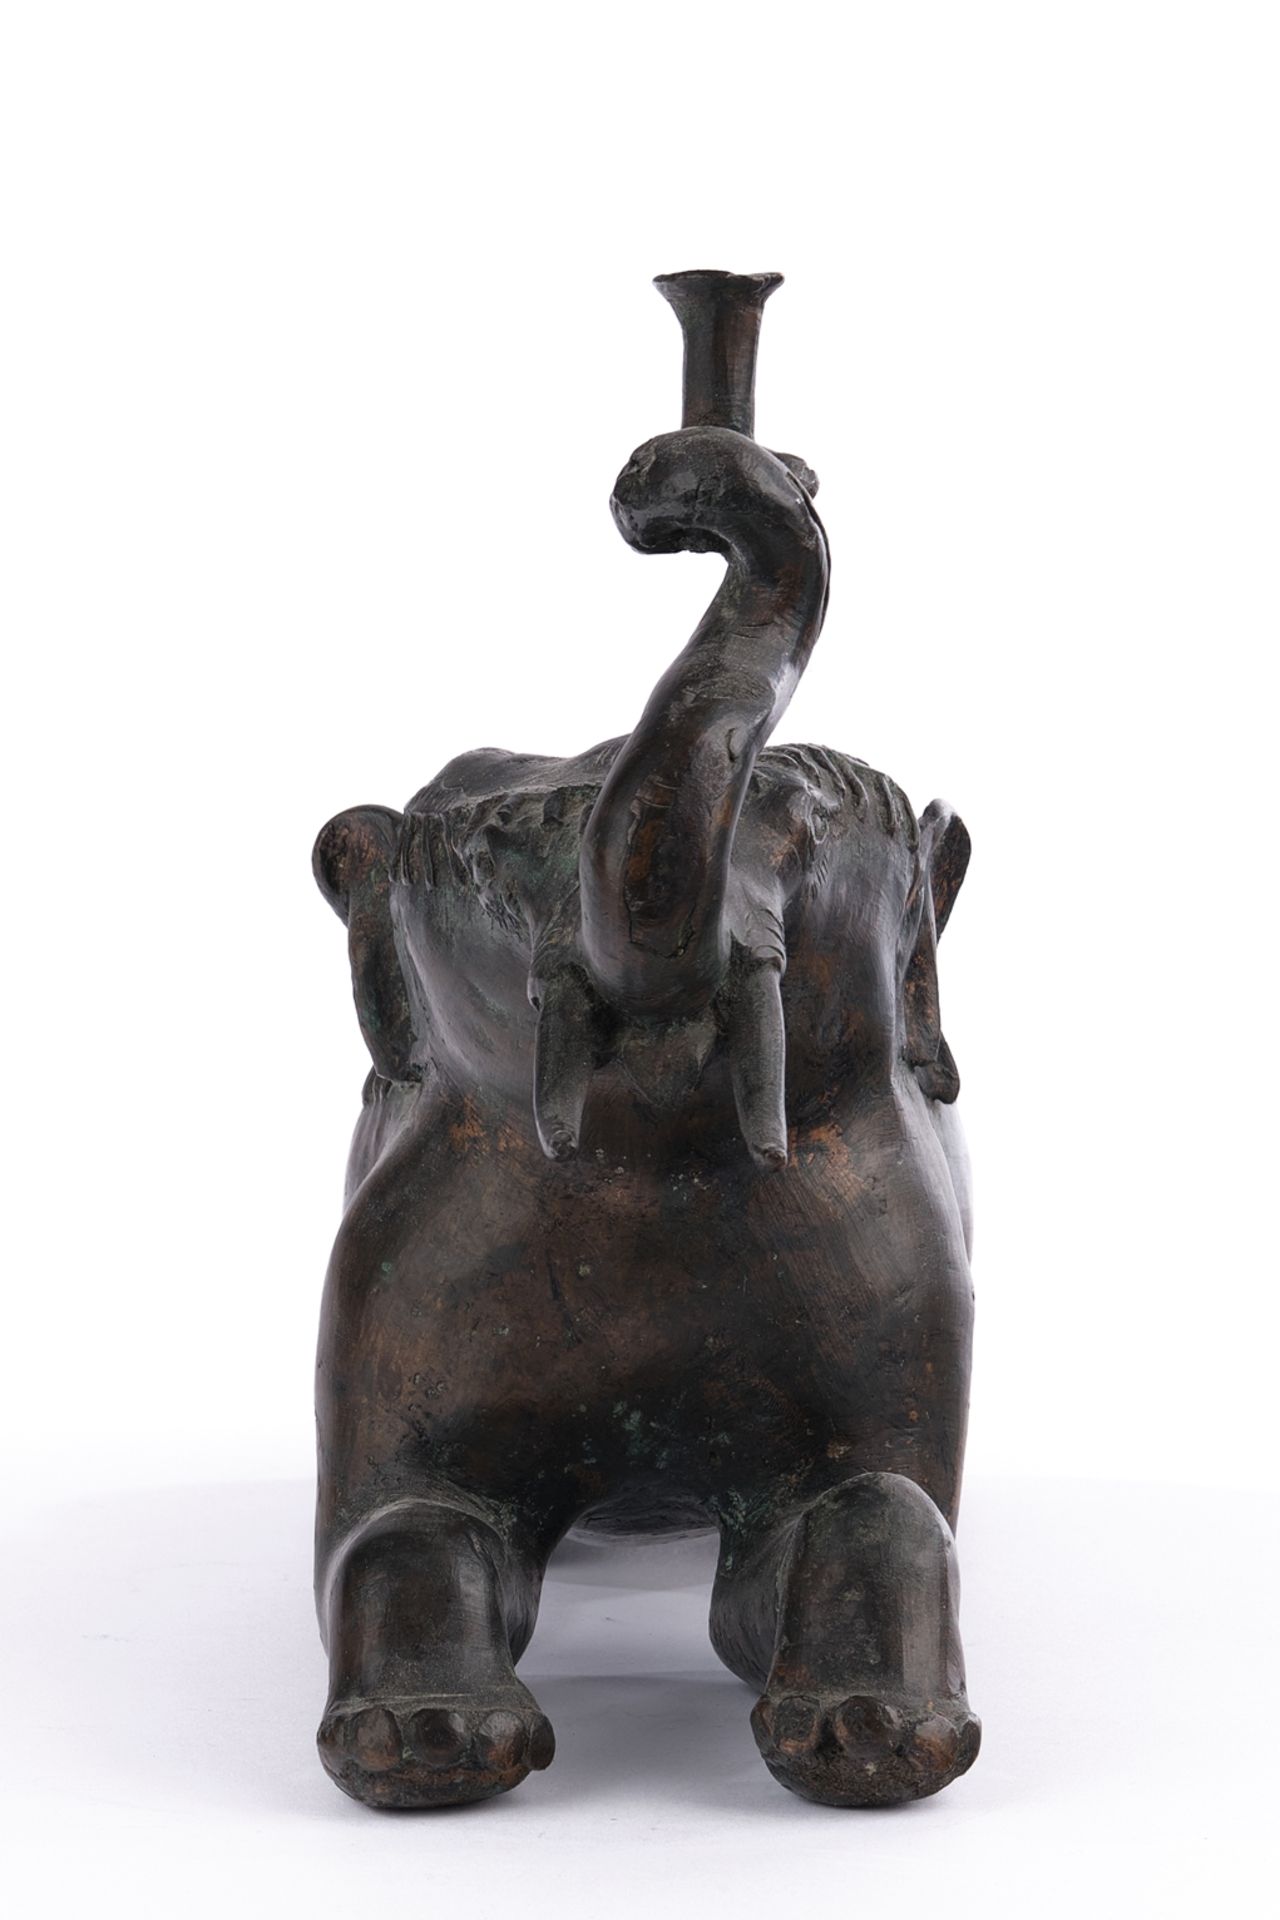 Sculpture, , "Reclining elephant", India, 20th/21st century, metal, dark patina, 22 cm high - Image 2 of 4